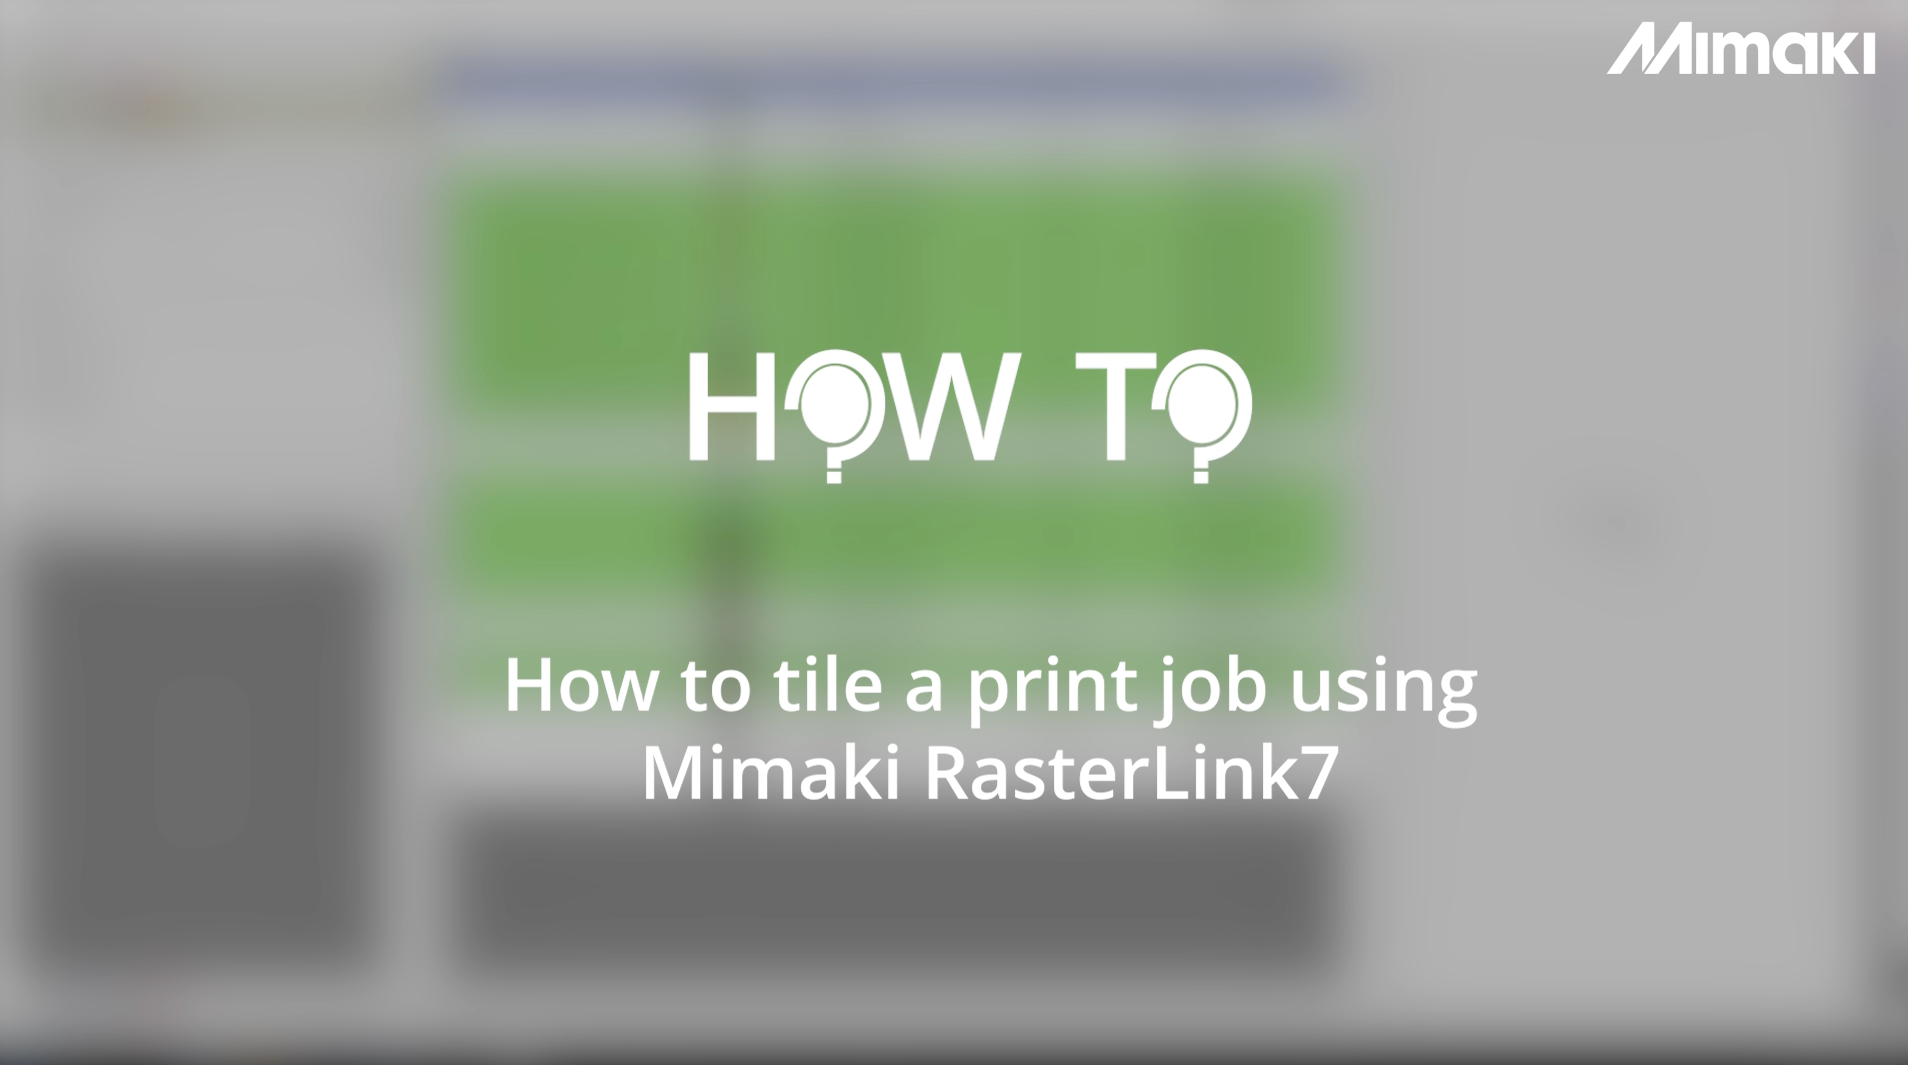 How to tile a print job using Mimaki RasterLink7